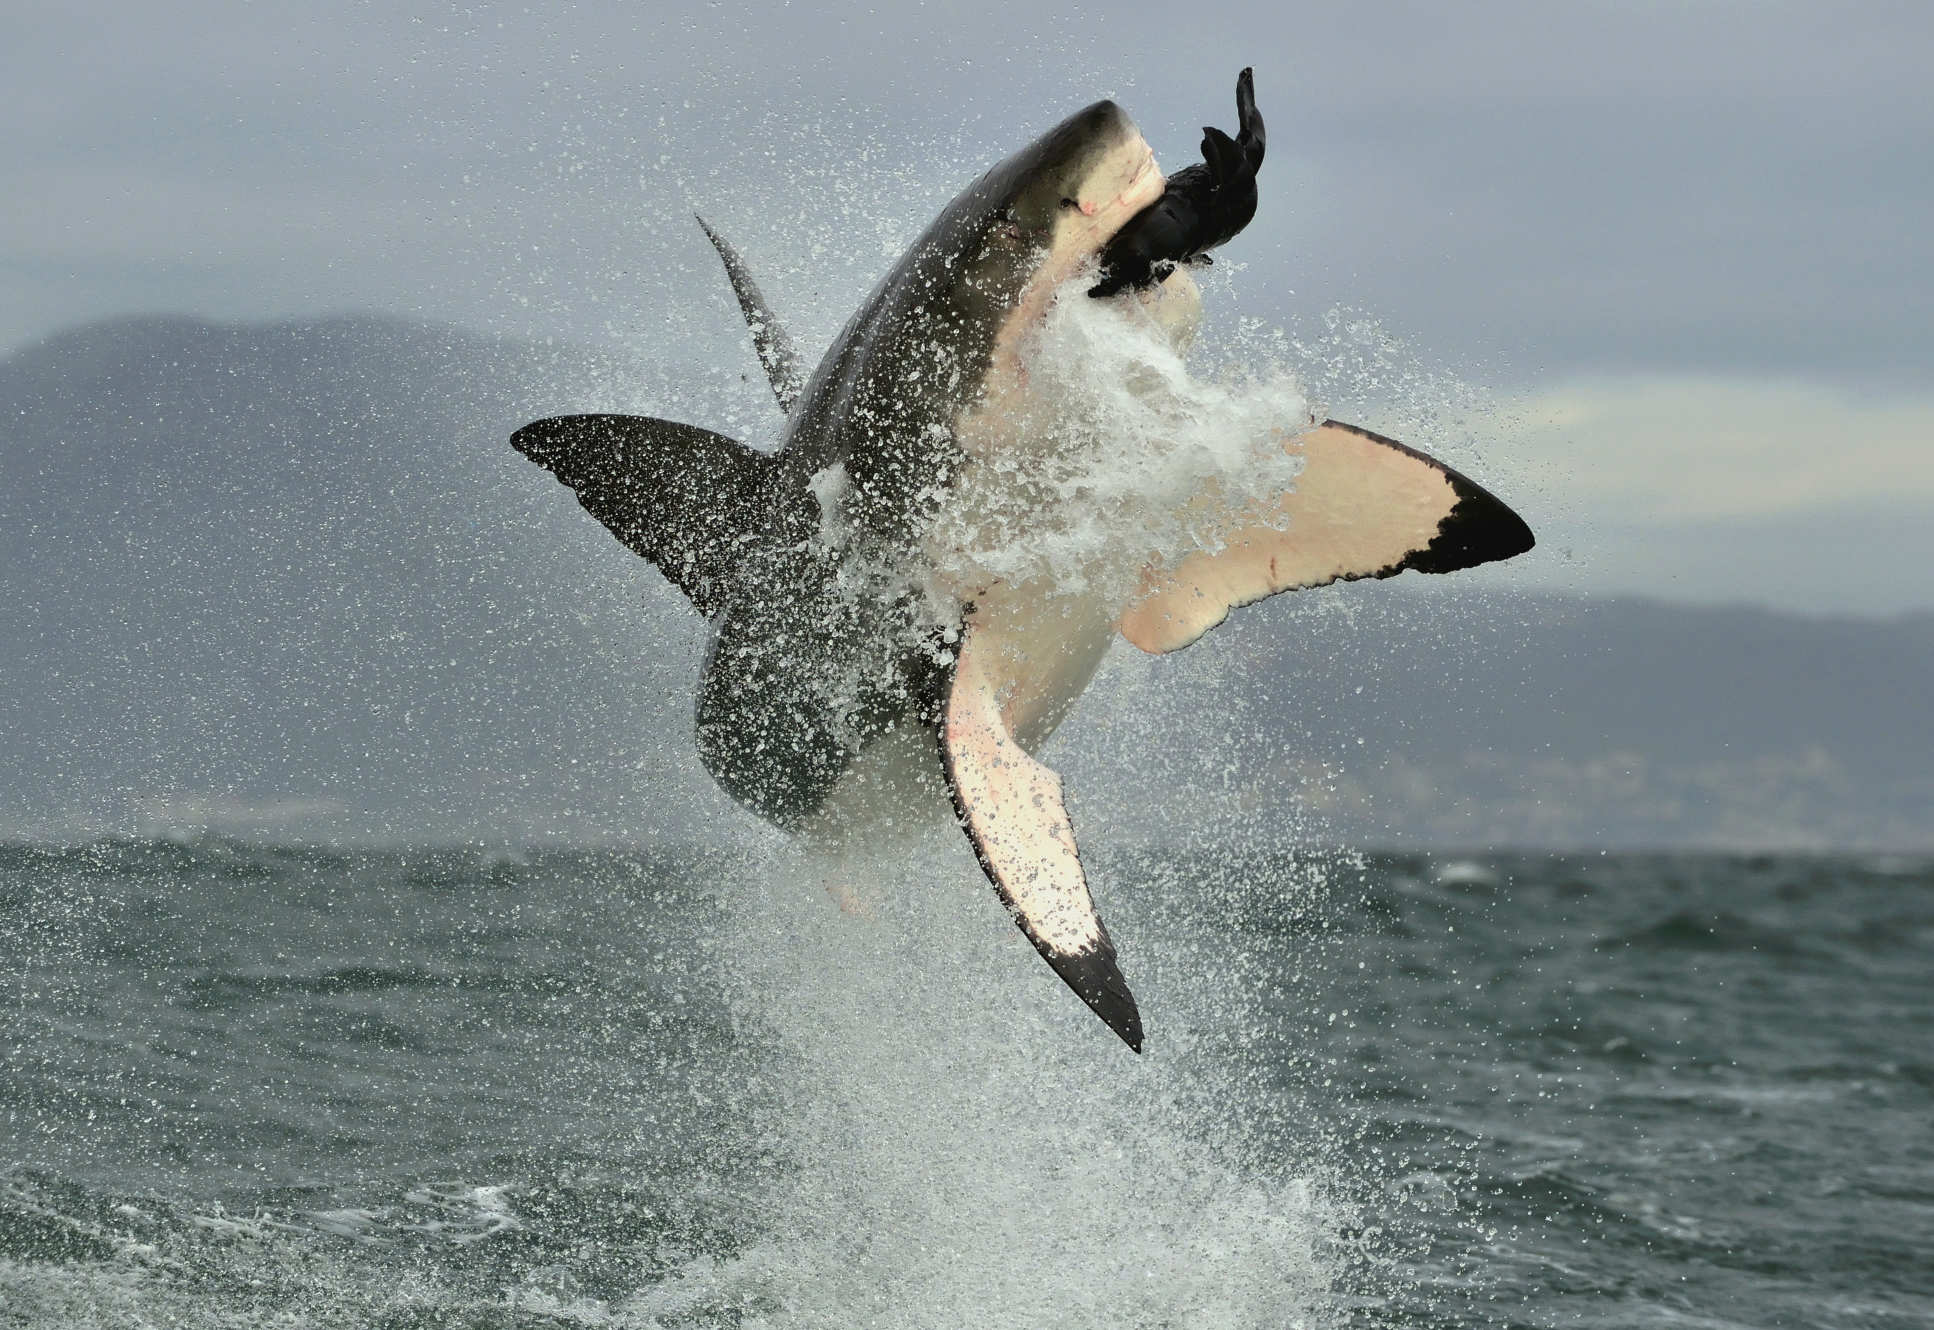 Great white shark hunting